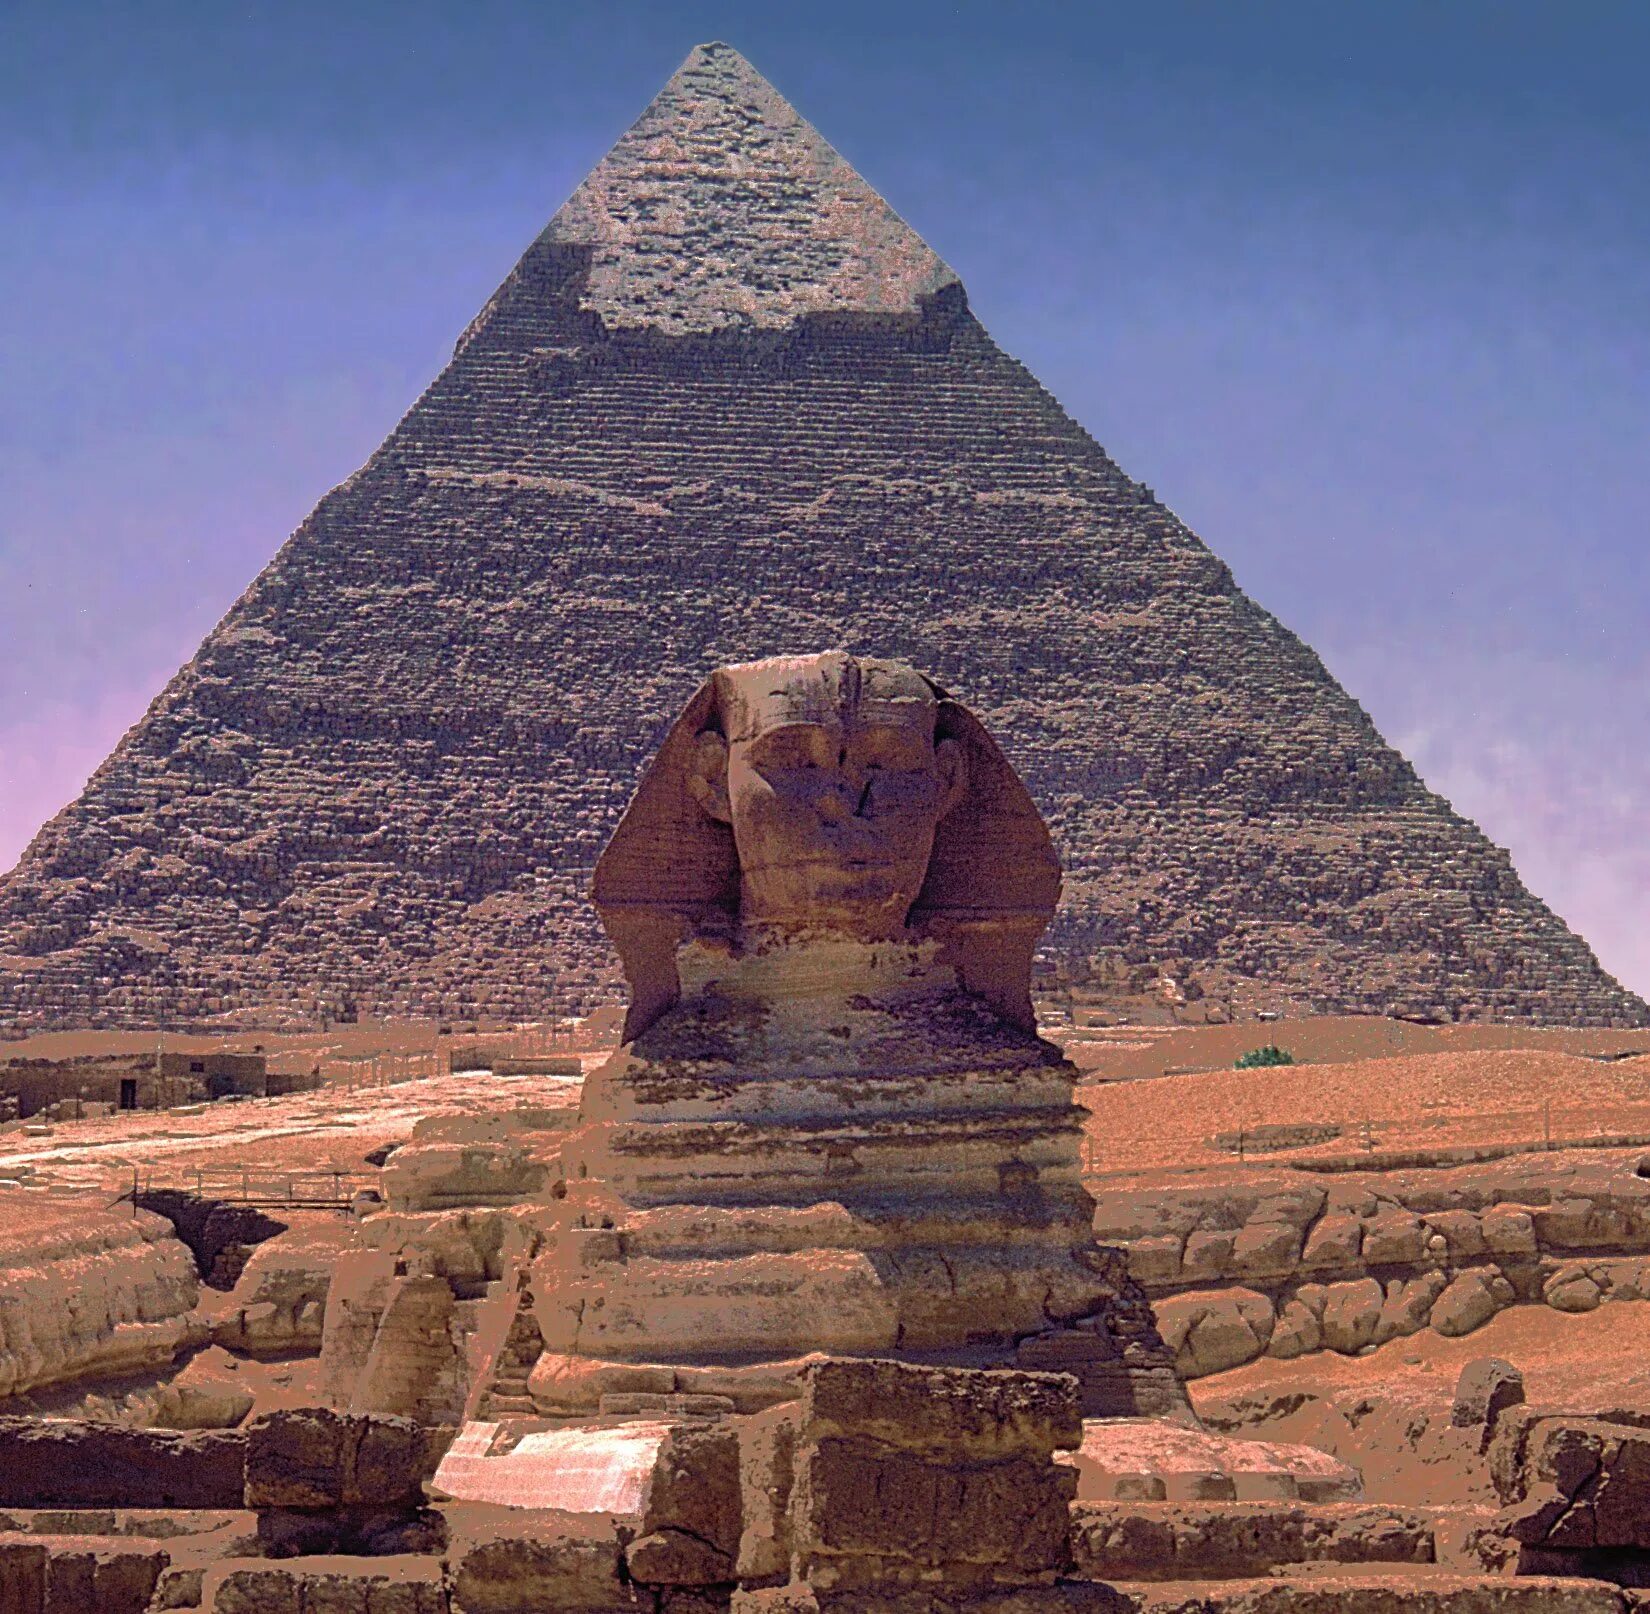 Misr piramidalari haqida. Сфинкс древнего Египта. Сфинкс пирамида в Египте. Пирамида Хеопса древний Египет. Клеопатра сфинкс пирамиды.